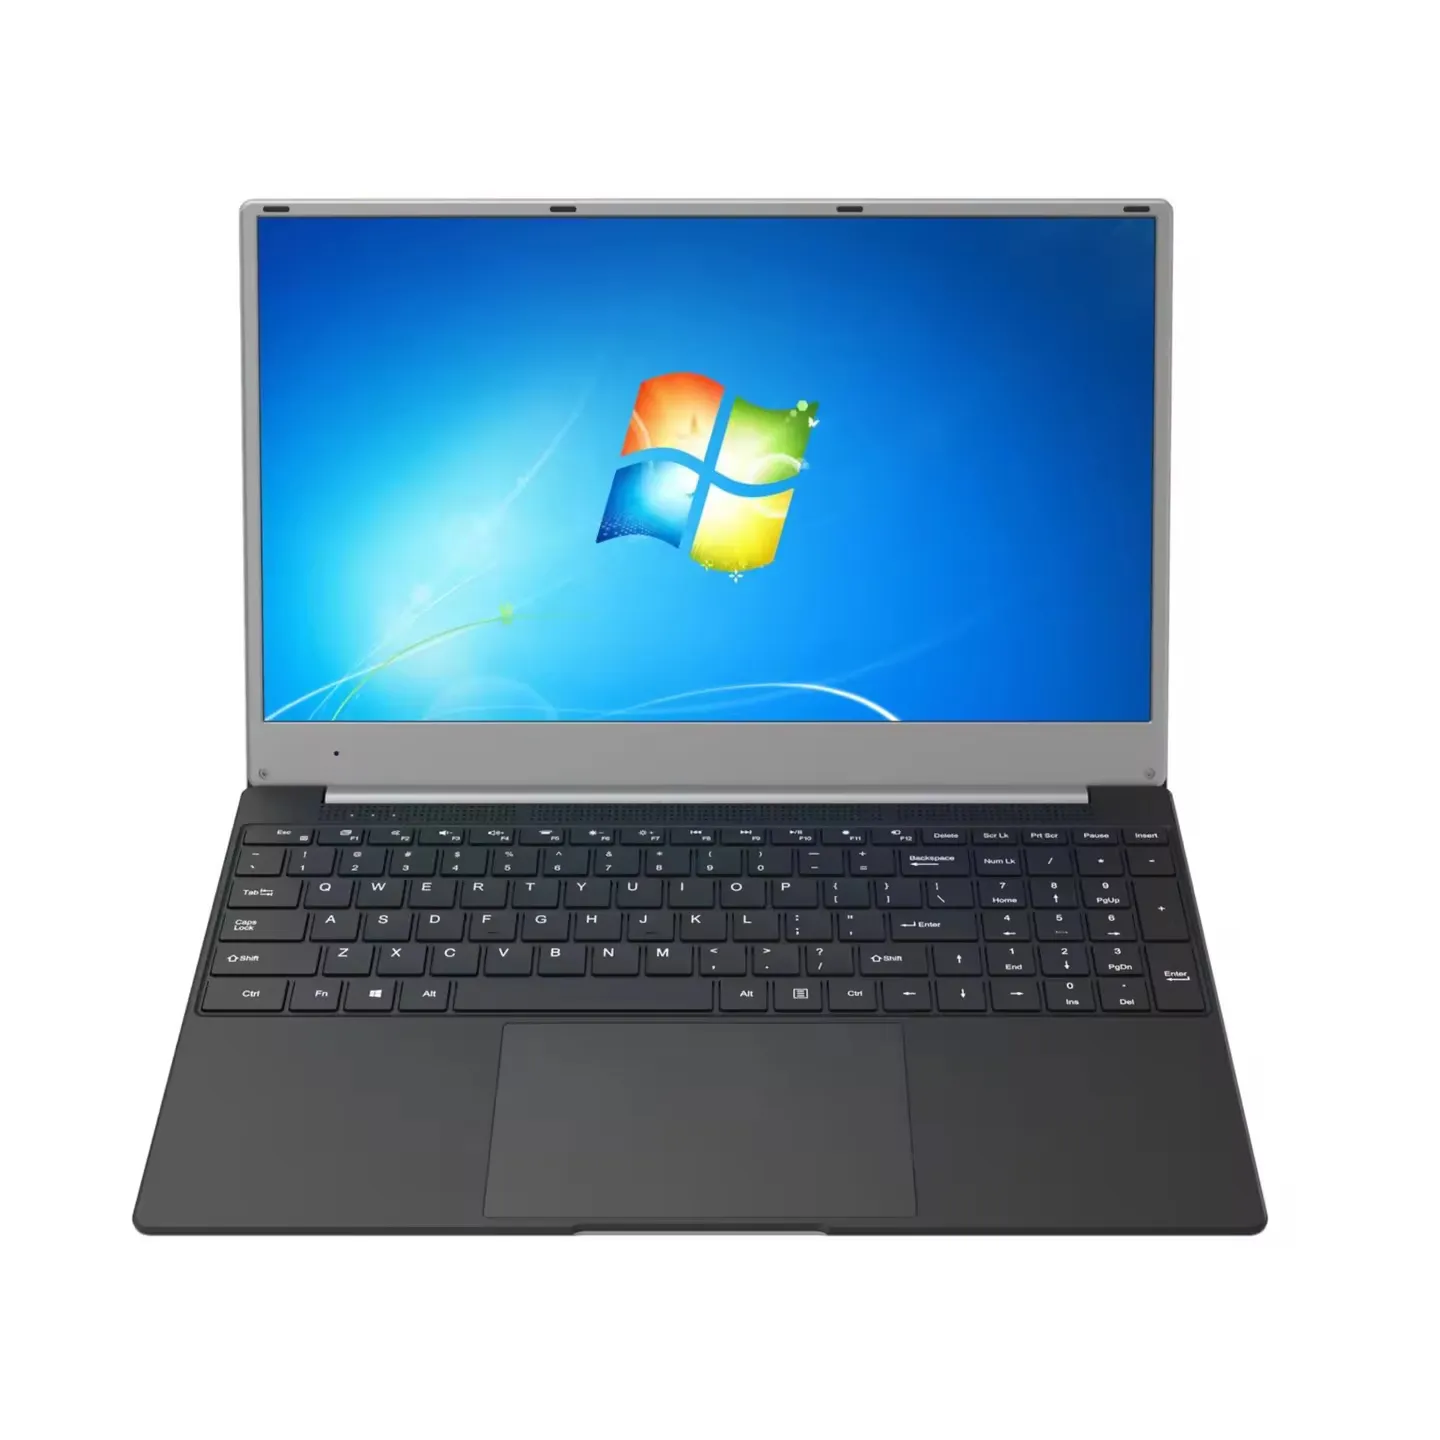 Laptop Mf158 Intel J4105 Inches Ips Scherm Ddr4/Ssd 6Gb/256Gb 4Cores 4Threads, 1.50 Ghz-2.50Ghz 5000Mah, 7.6V Effectief